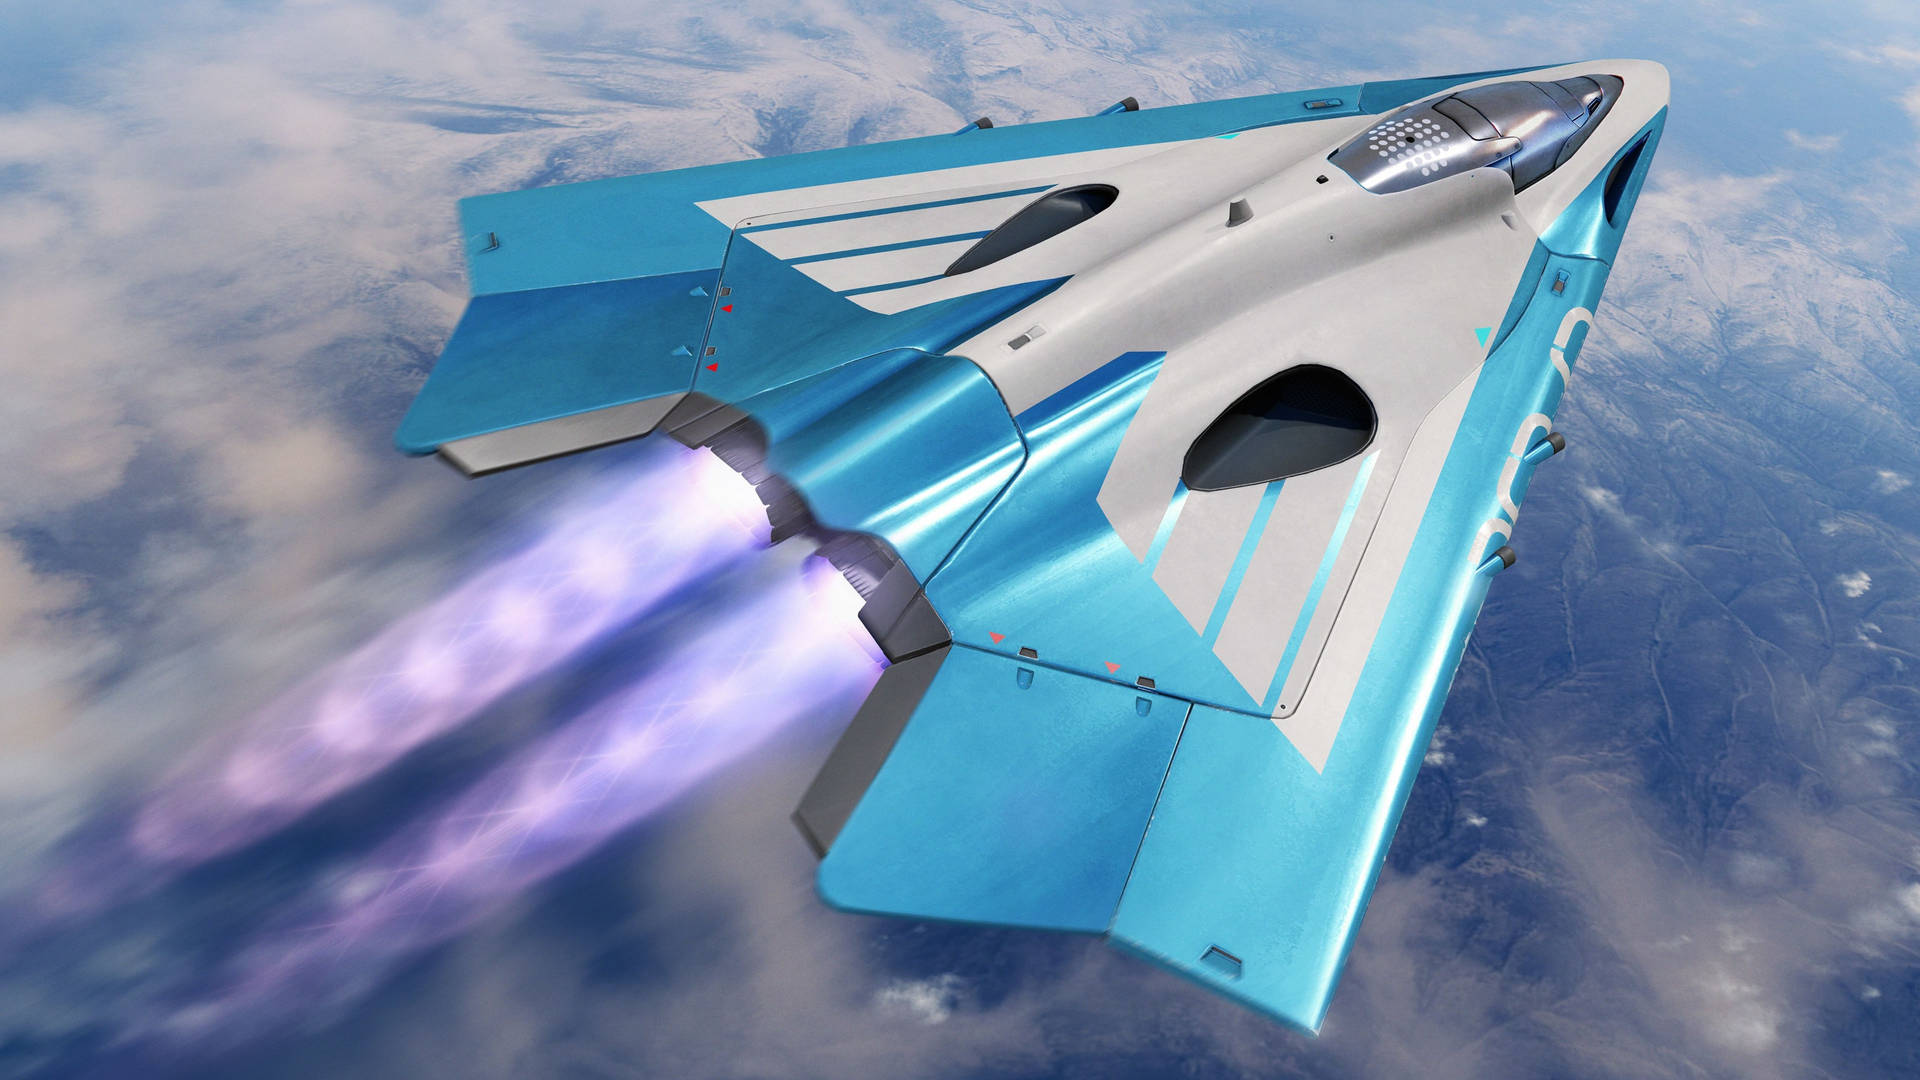 4k Plane In Metallic Blue Paint Background